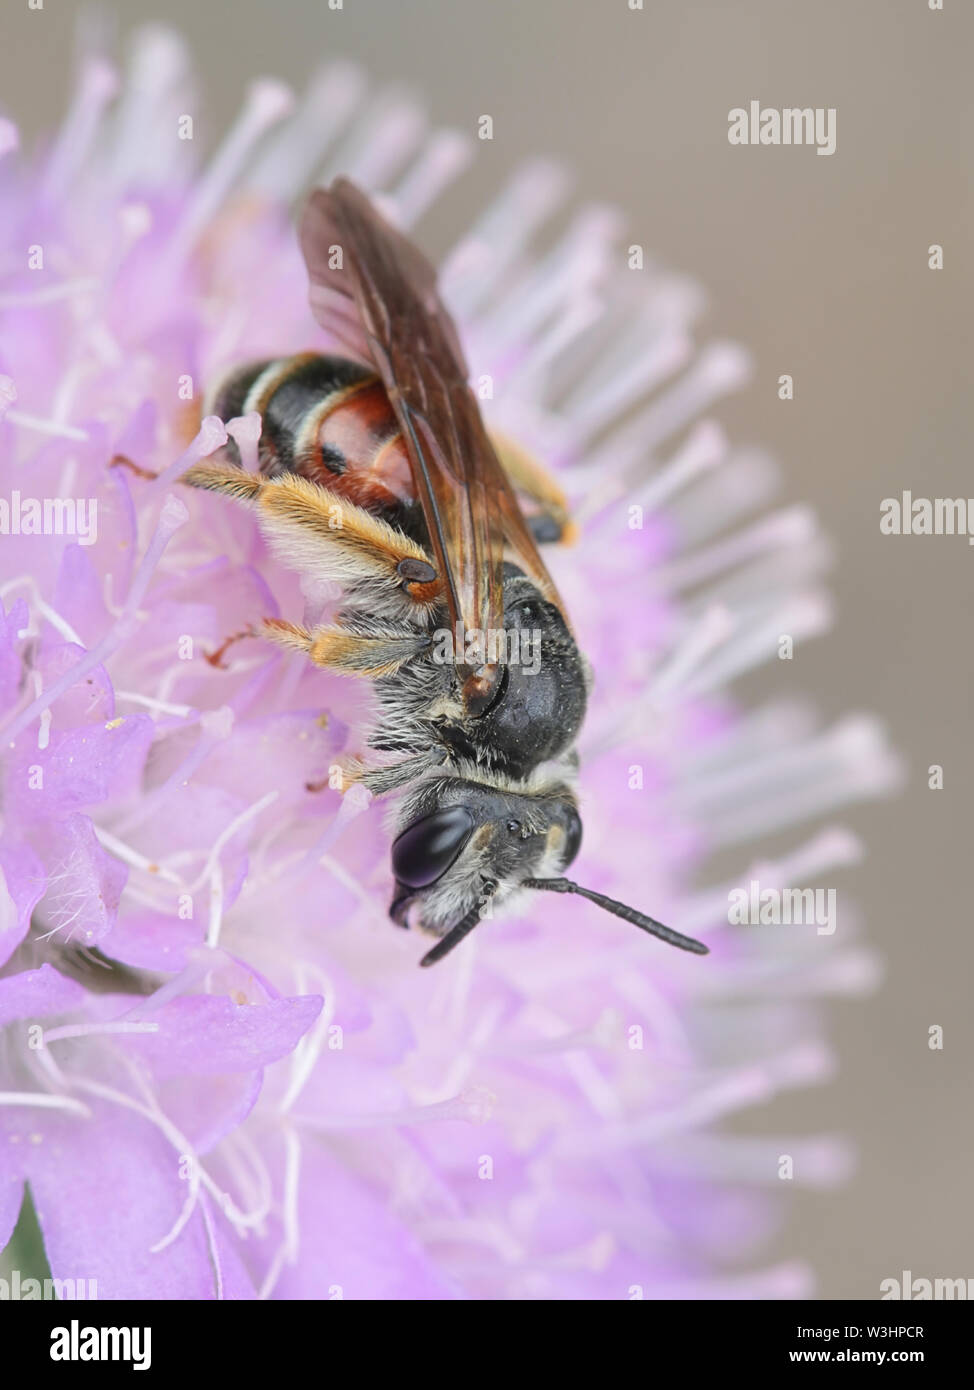 Andrena hattorfiana, a threatened species of mining bees belonging to the family Andrenidae, feeding on Field Scabious, Knautia arvensis Stock Photo